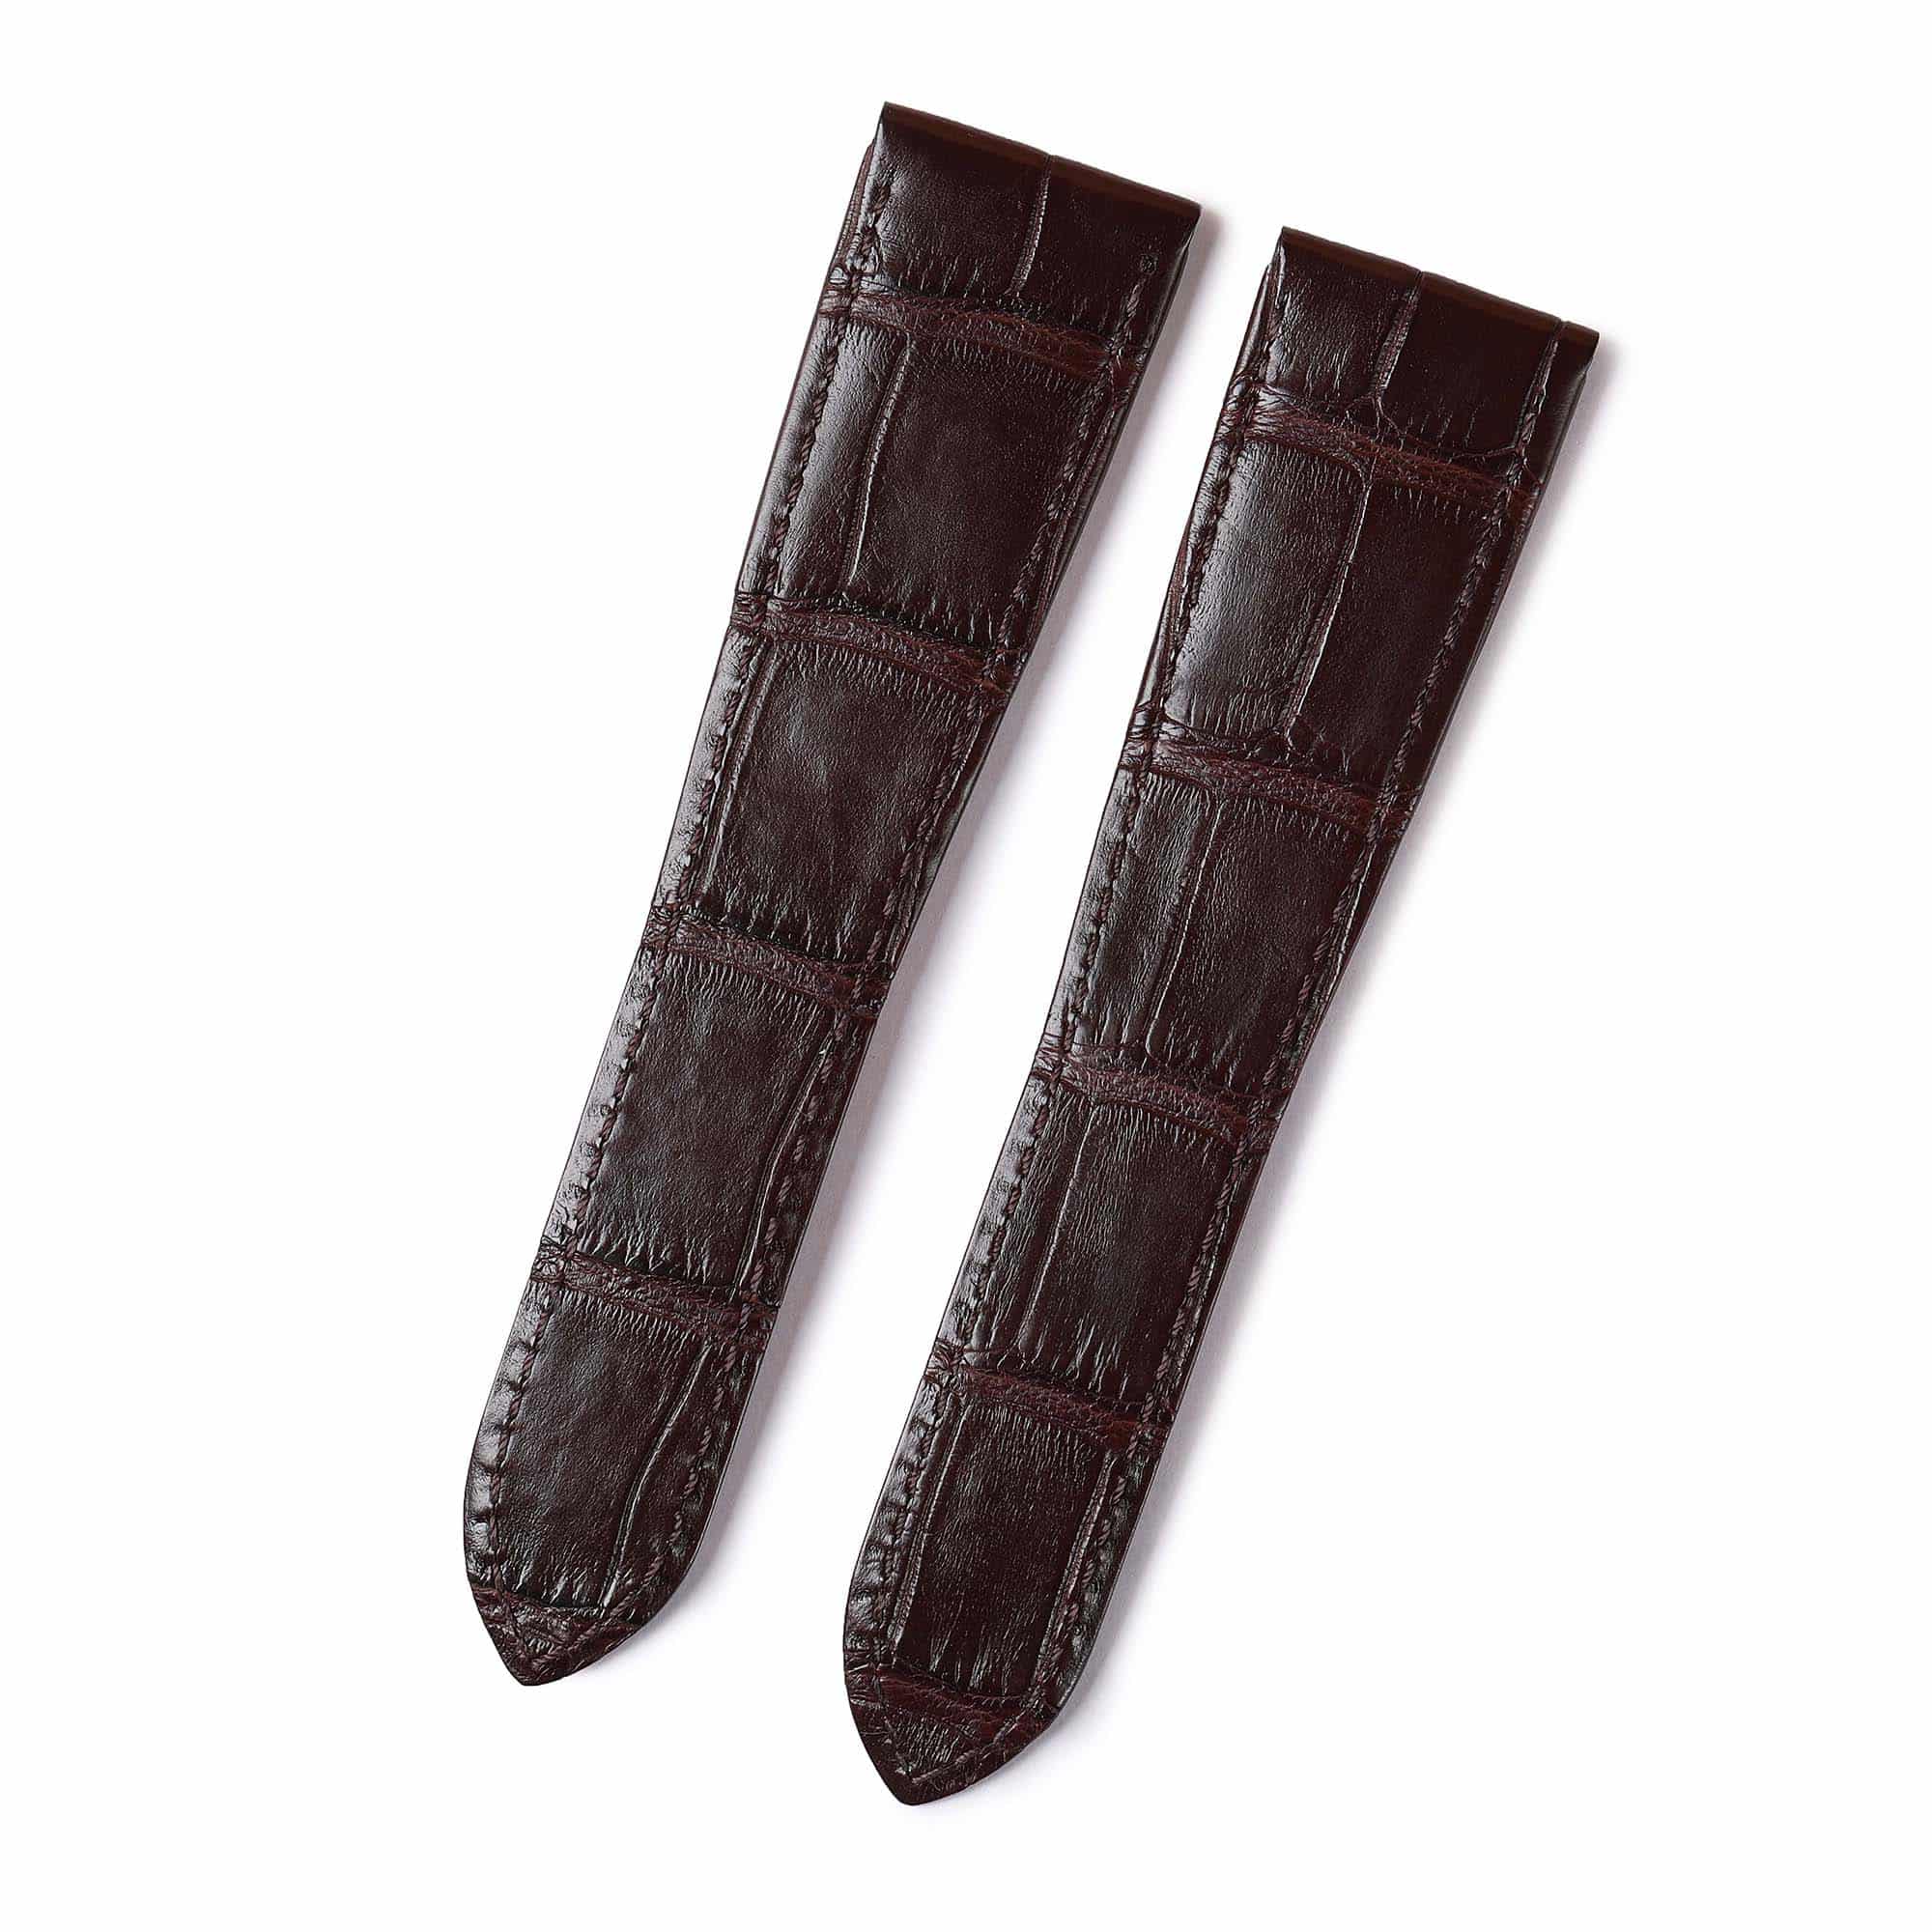 Custom brown alligator leather watch bands for Cartier Santos 100 strap